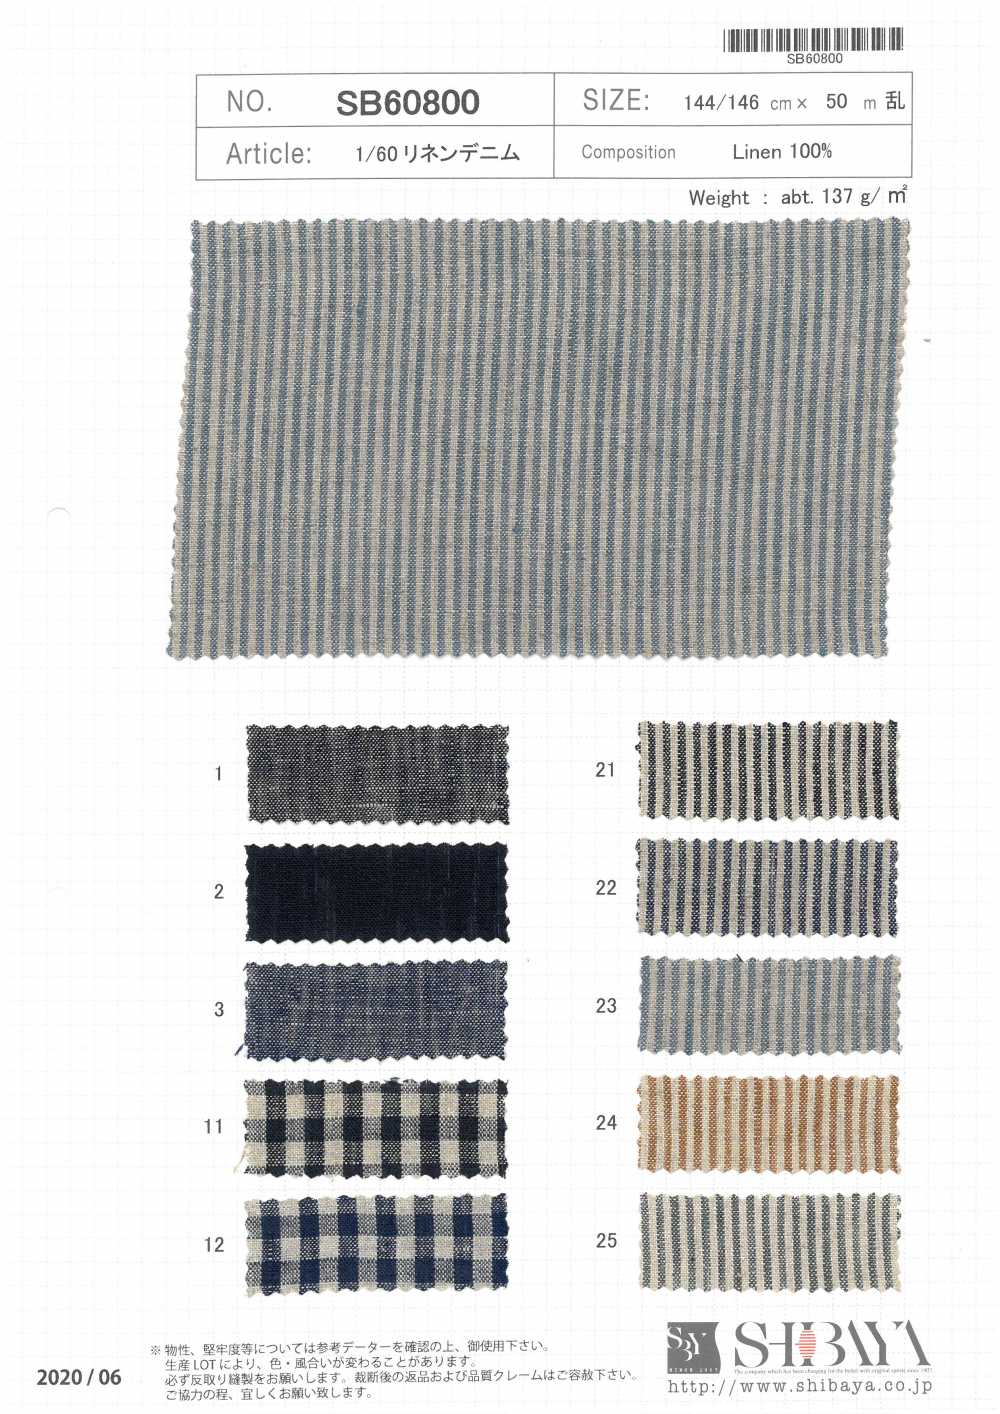 SB60800 Denim De Lino 1/60[Fabrica Textil] SHIBAYA